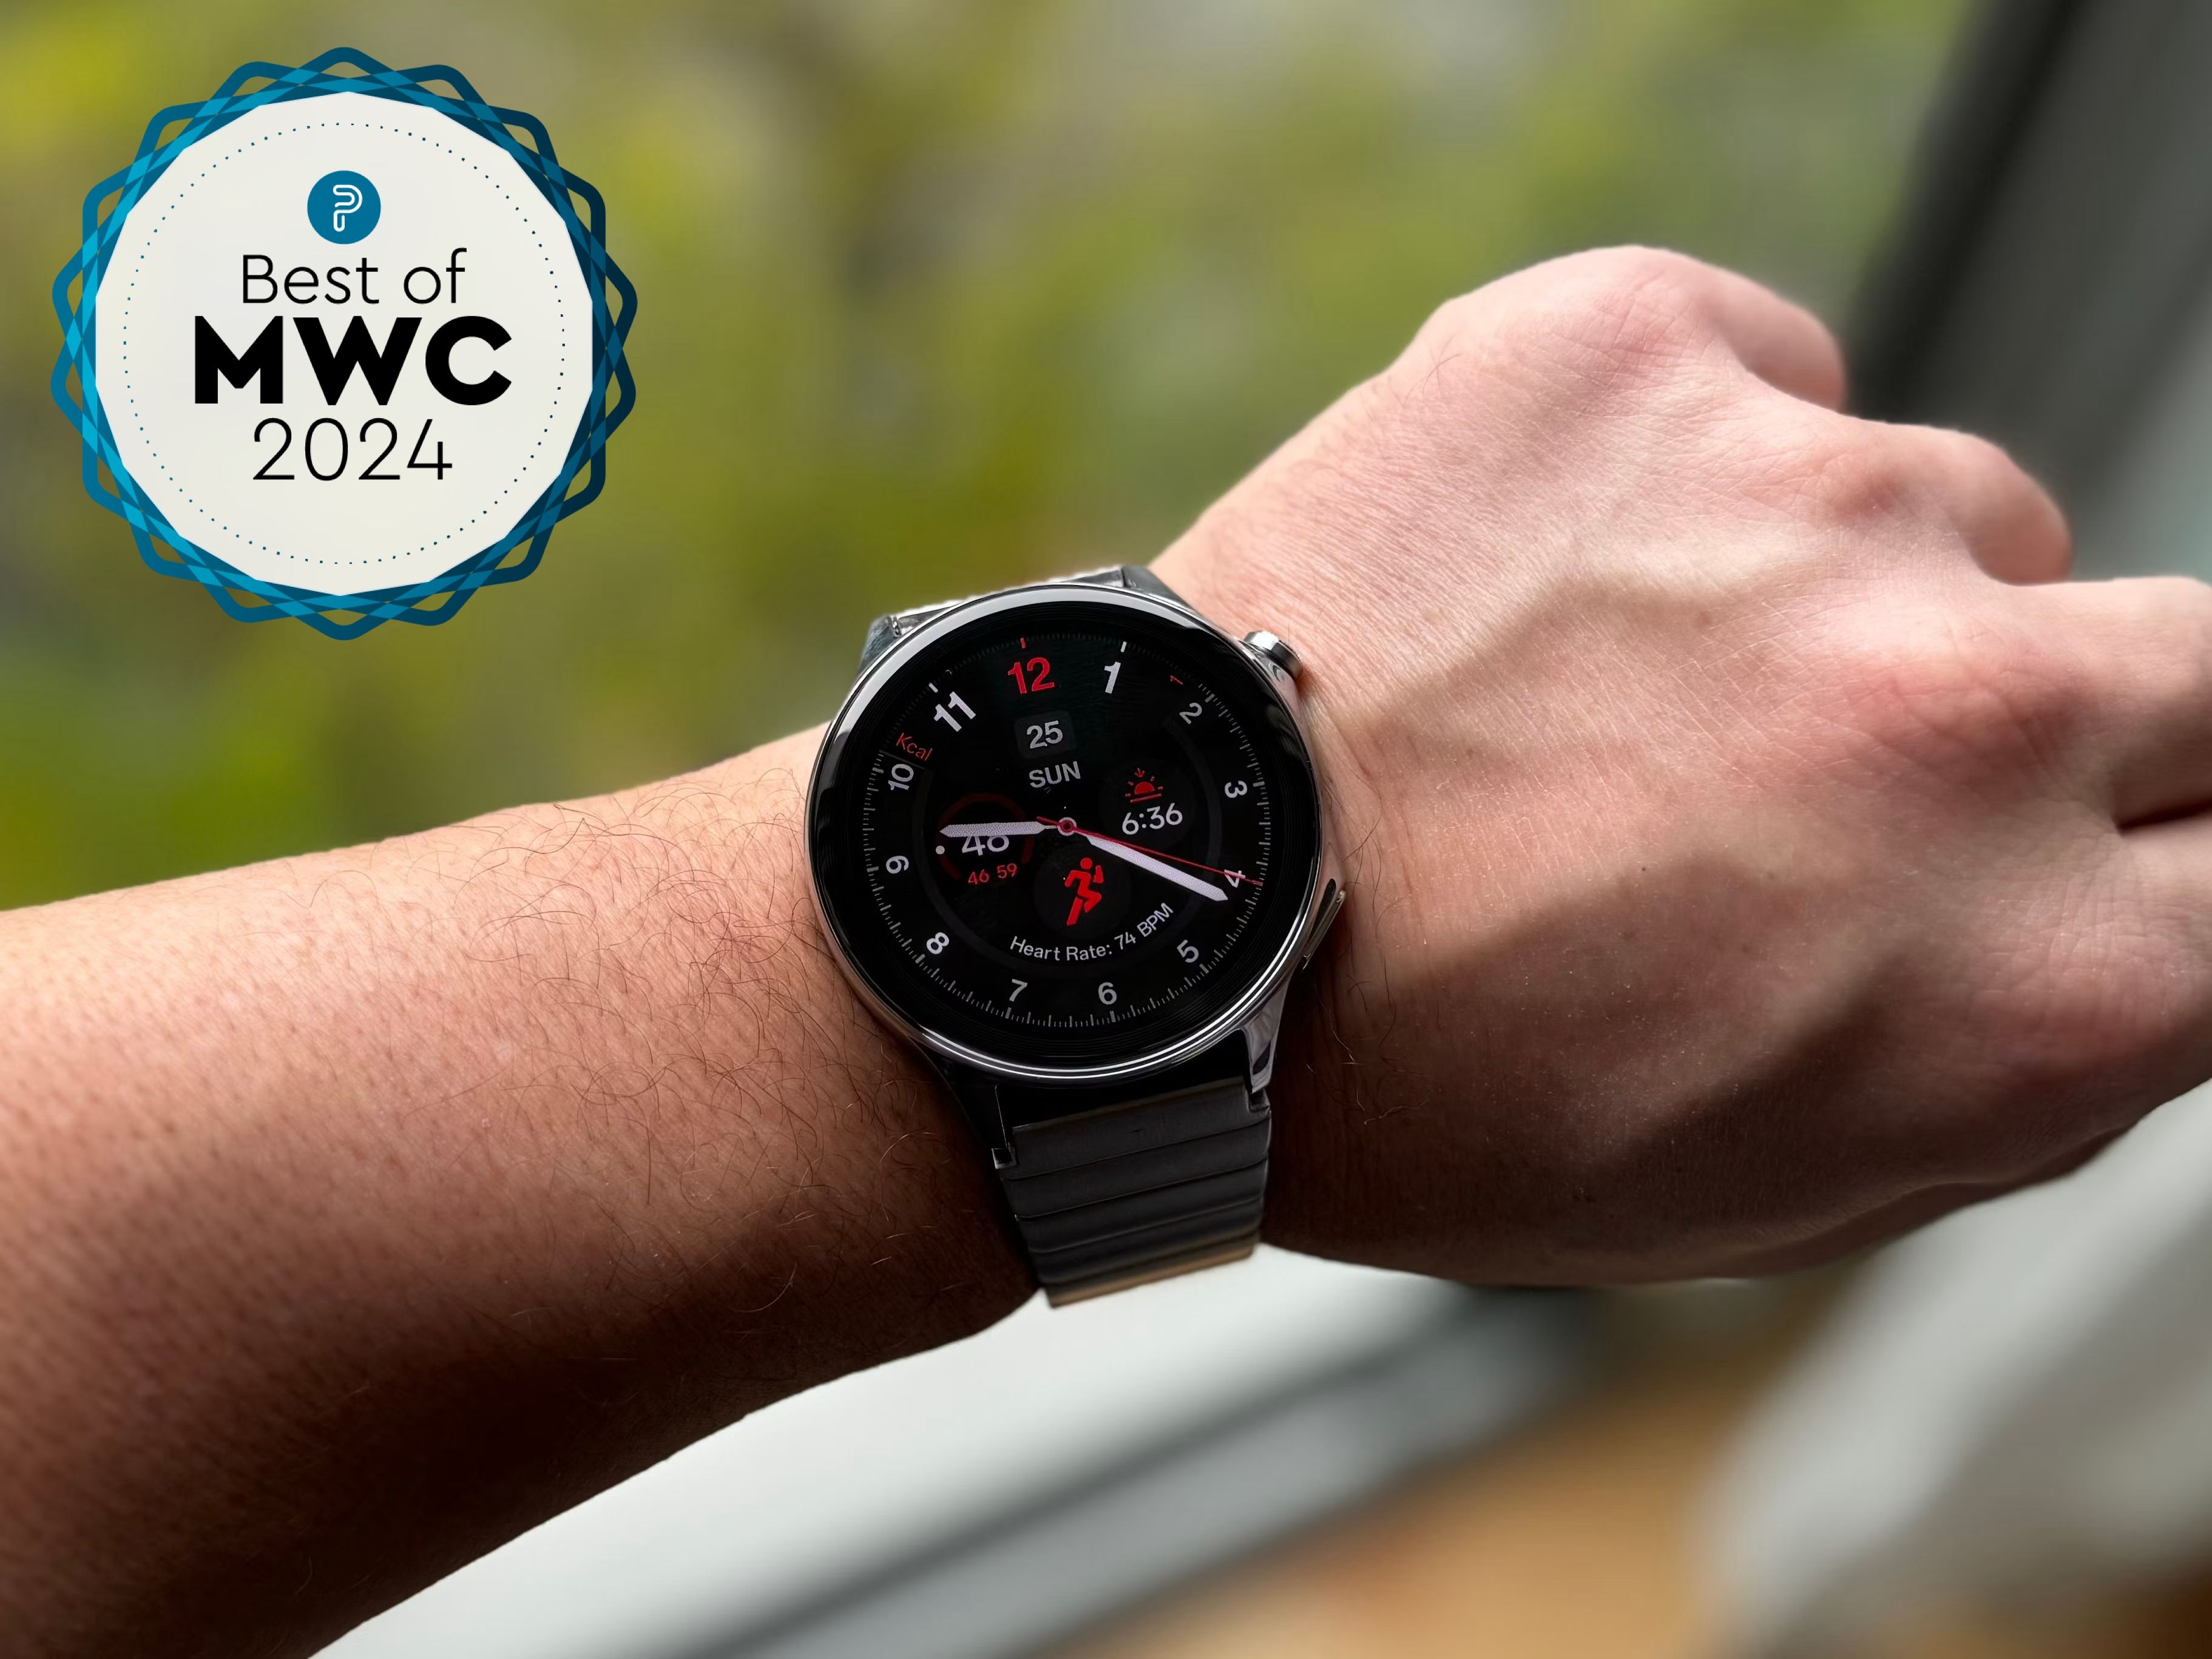 OnePlus Watch 2 best of mwc 2024